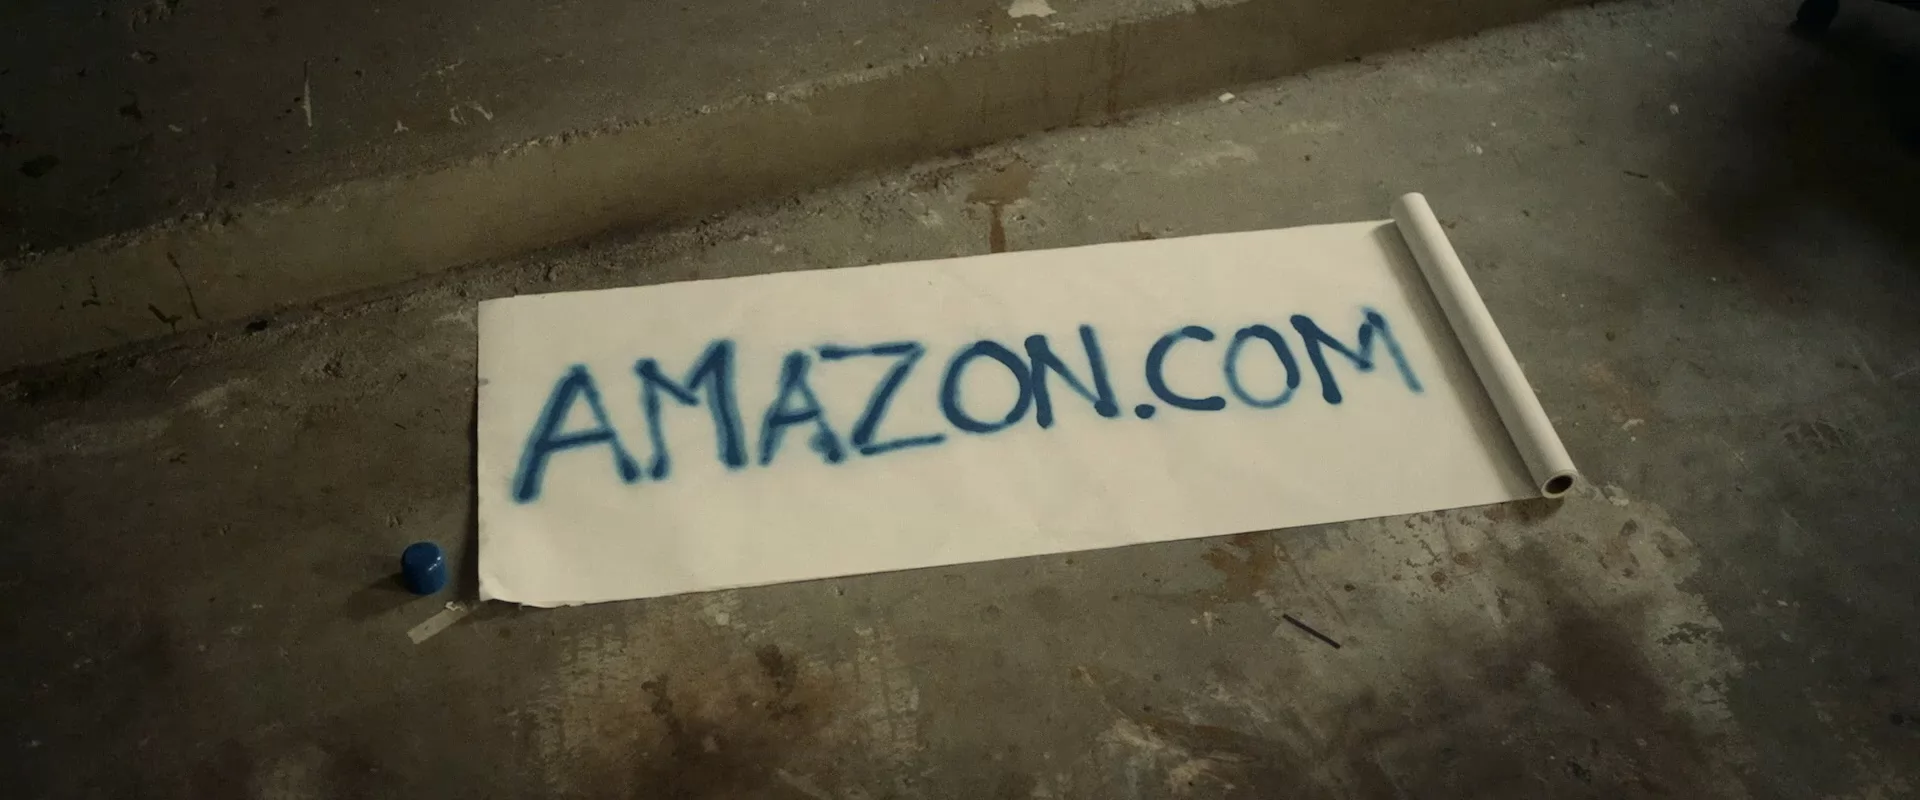 Безос. Человек, создавший Amazon: кадр N218480